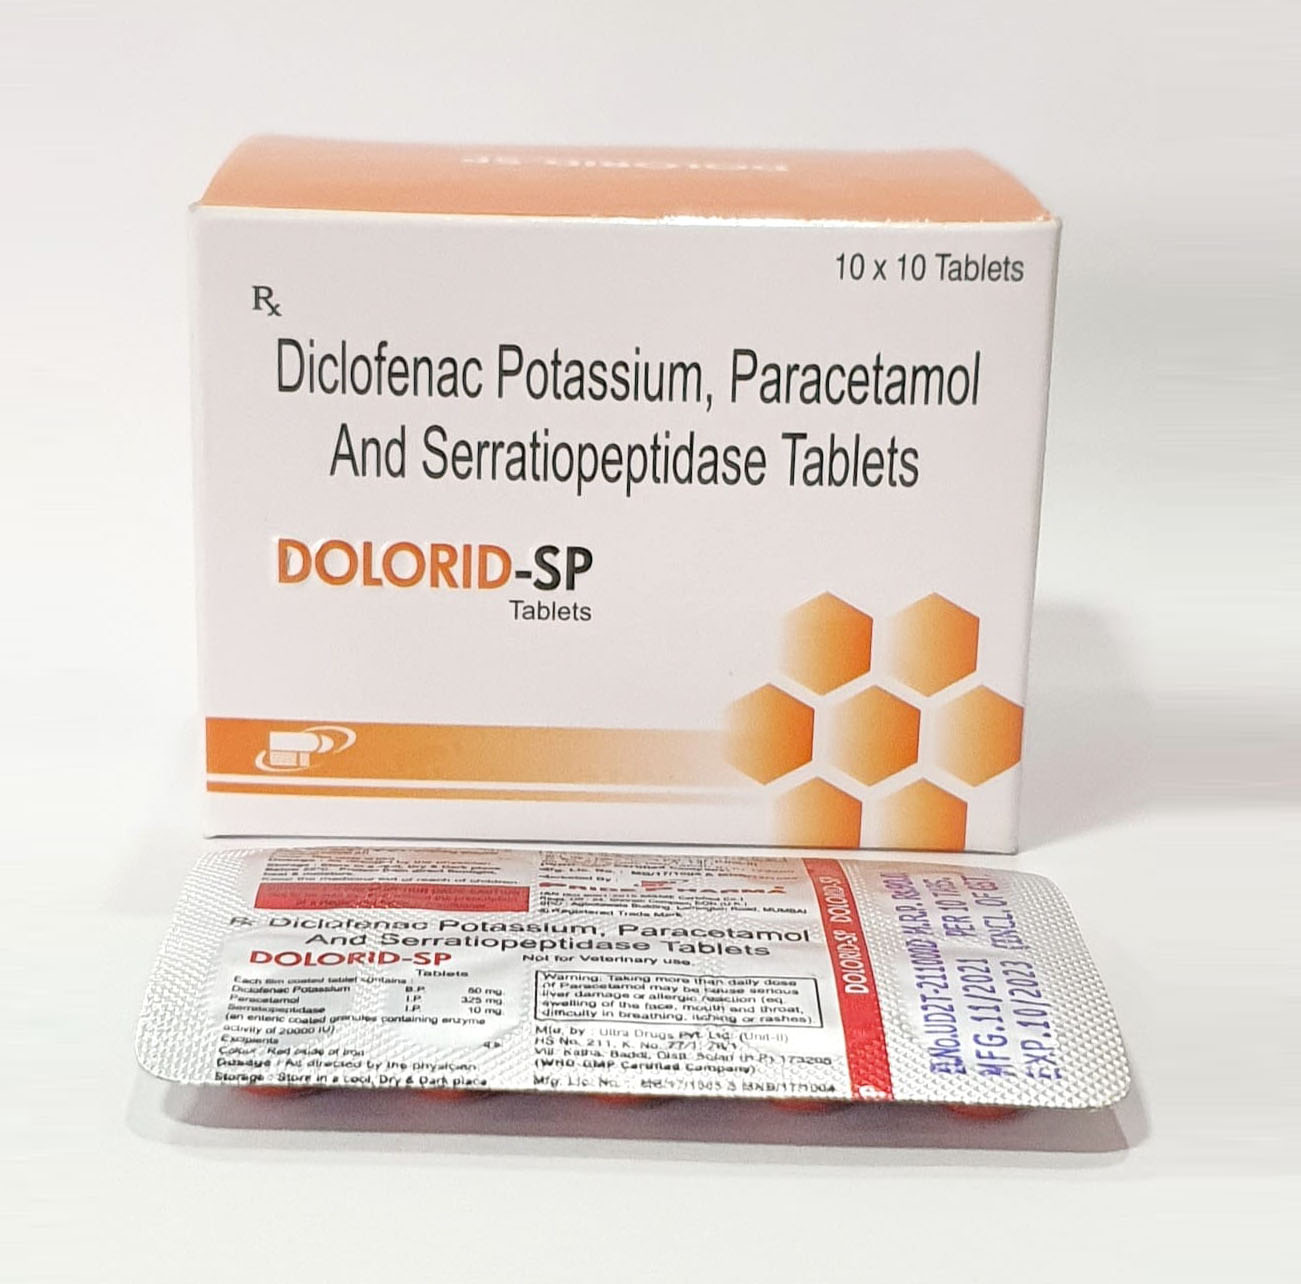 Product Name: Dolorid SP, Compositions of Dolorid SP are Diclofenac Potassium Paracetamol & Serratiopeptiside Tablets - Pride Pharma